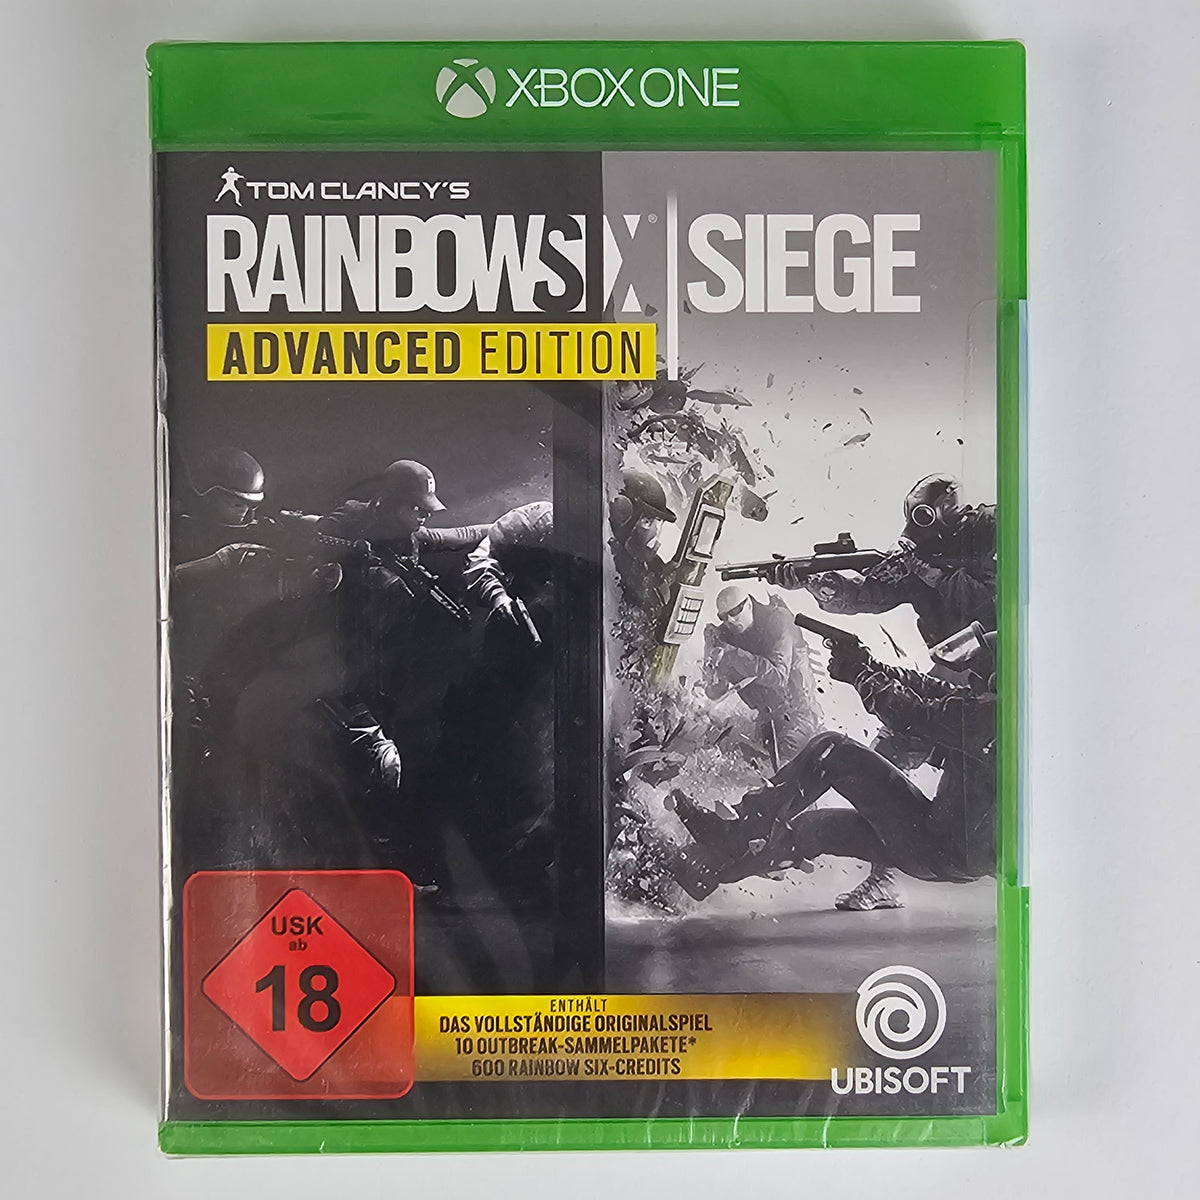 Rainbow Six: Advance Edition [XBOXO]